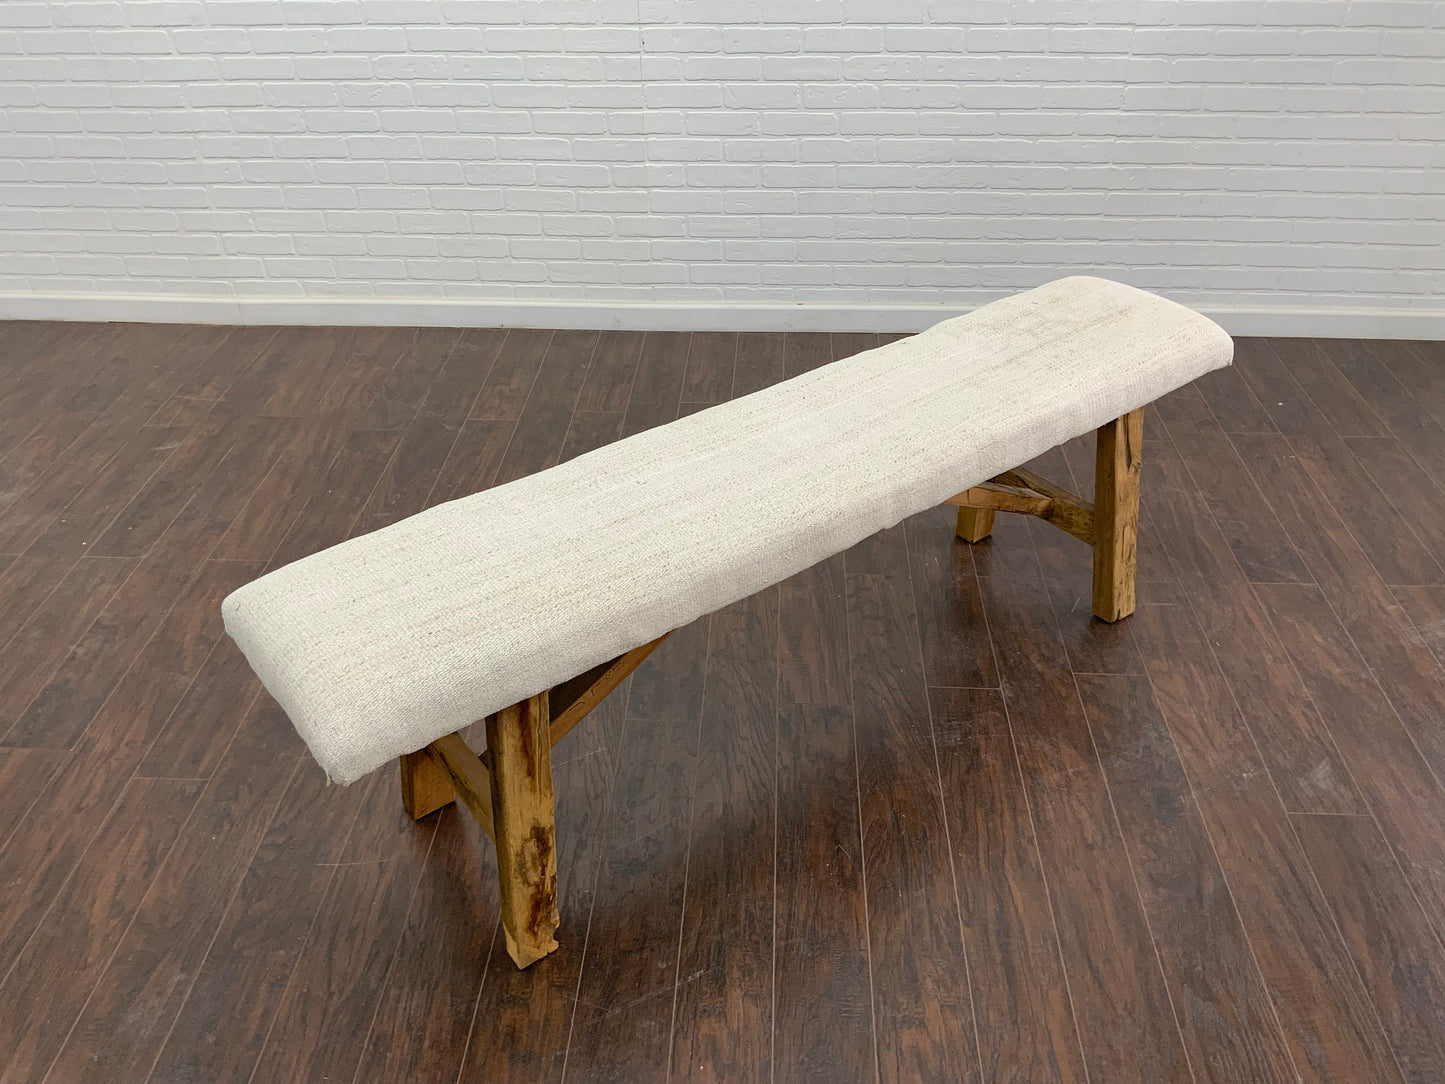 LG - Vintage Rug Upholstered Wood Bench - White Turkish Hemp